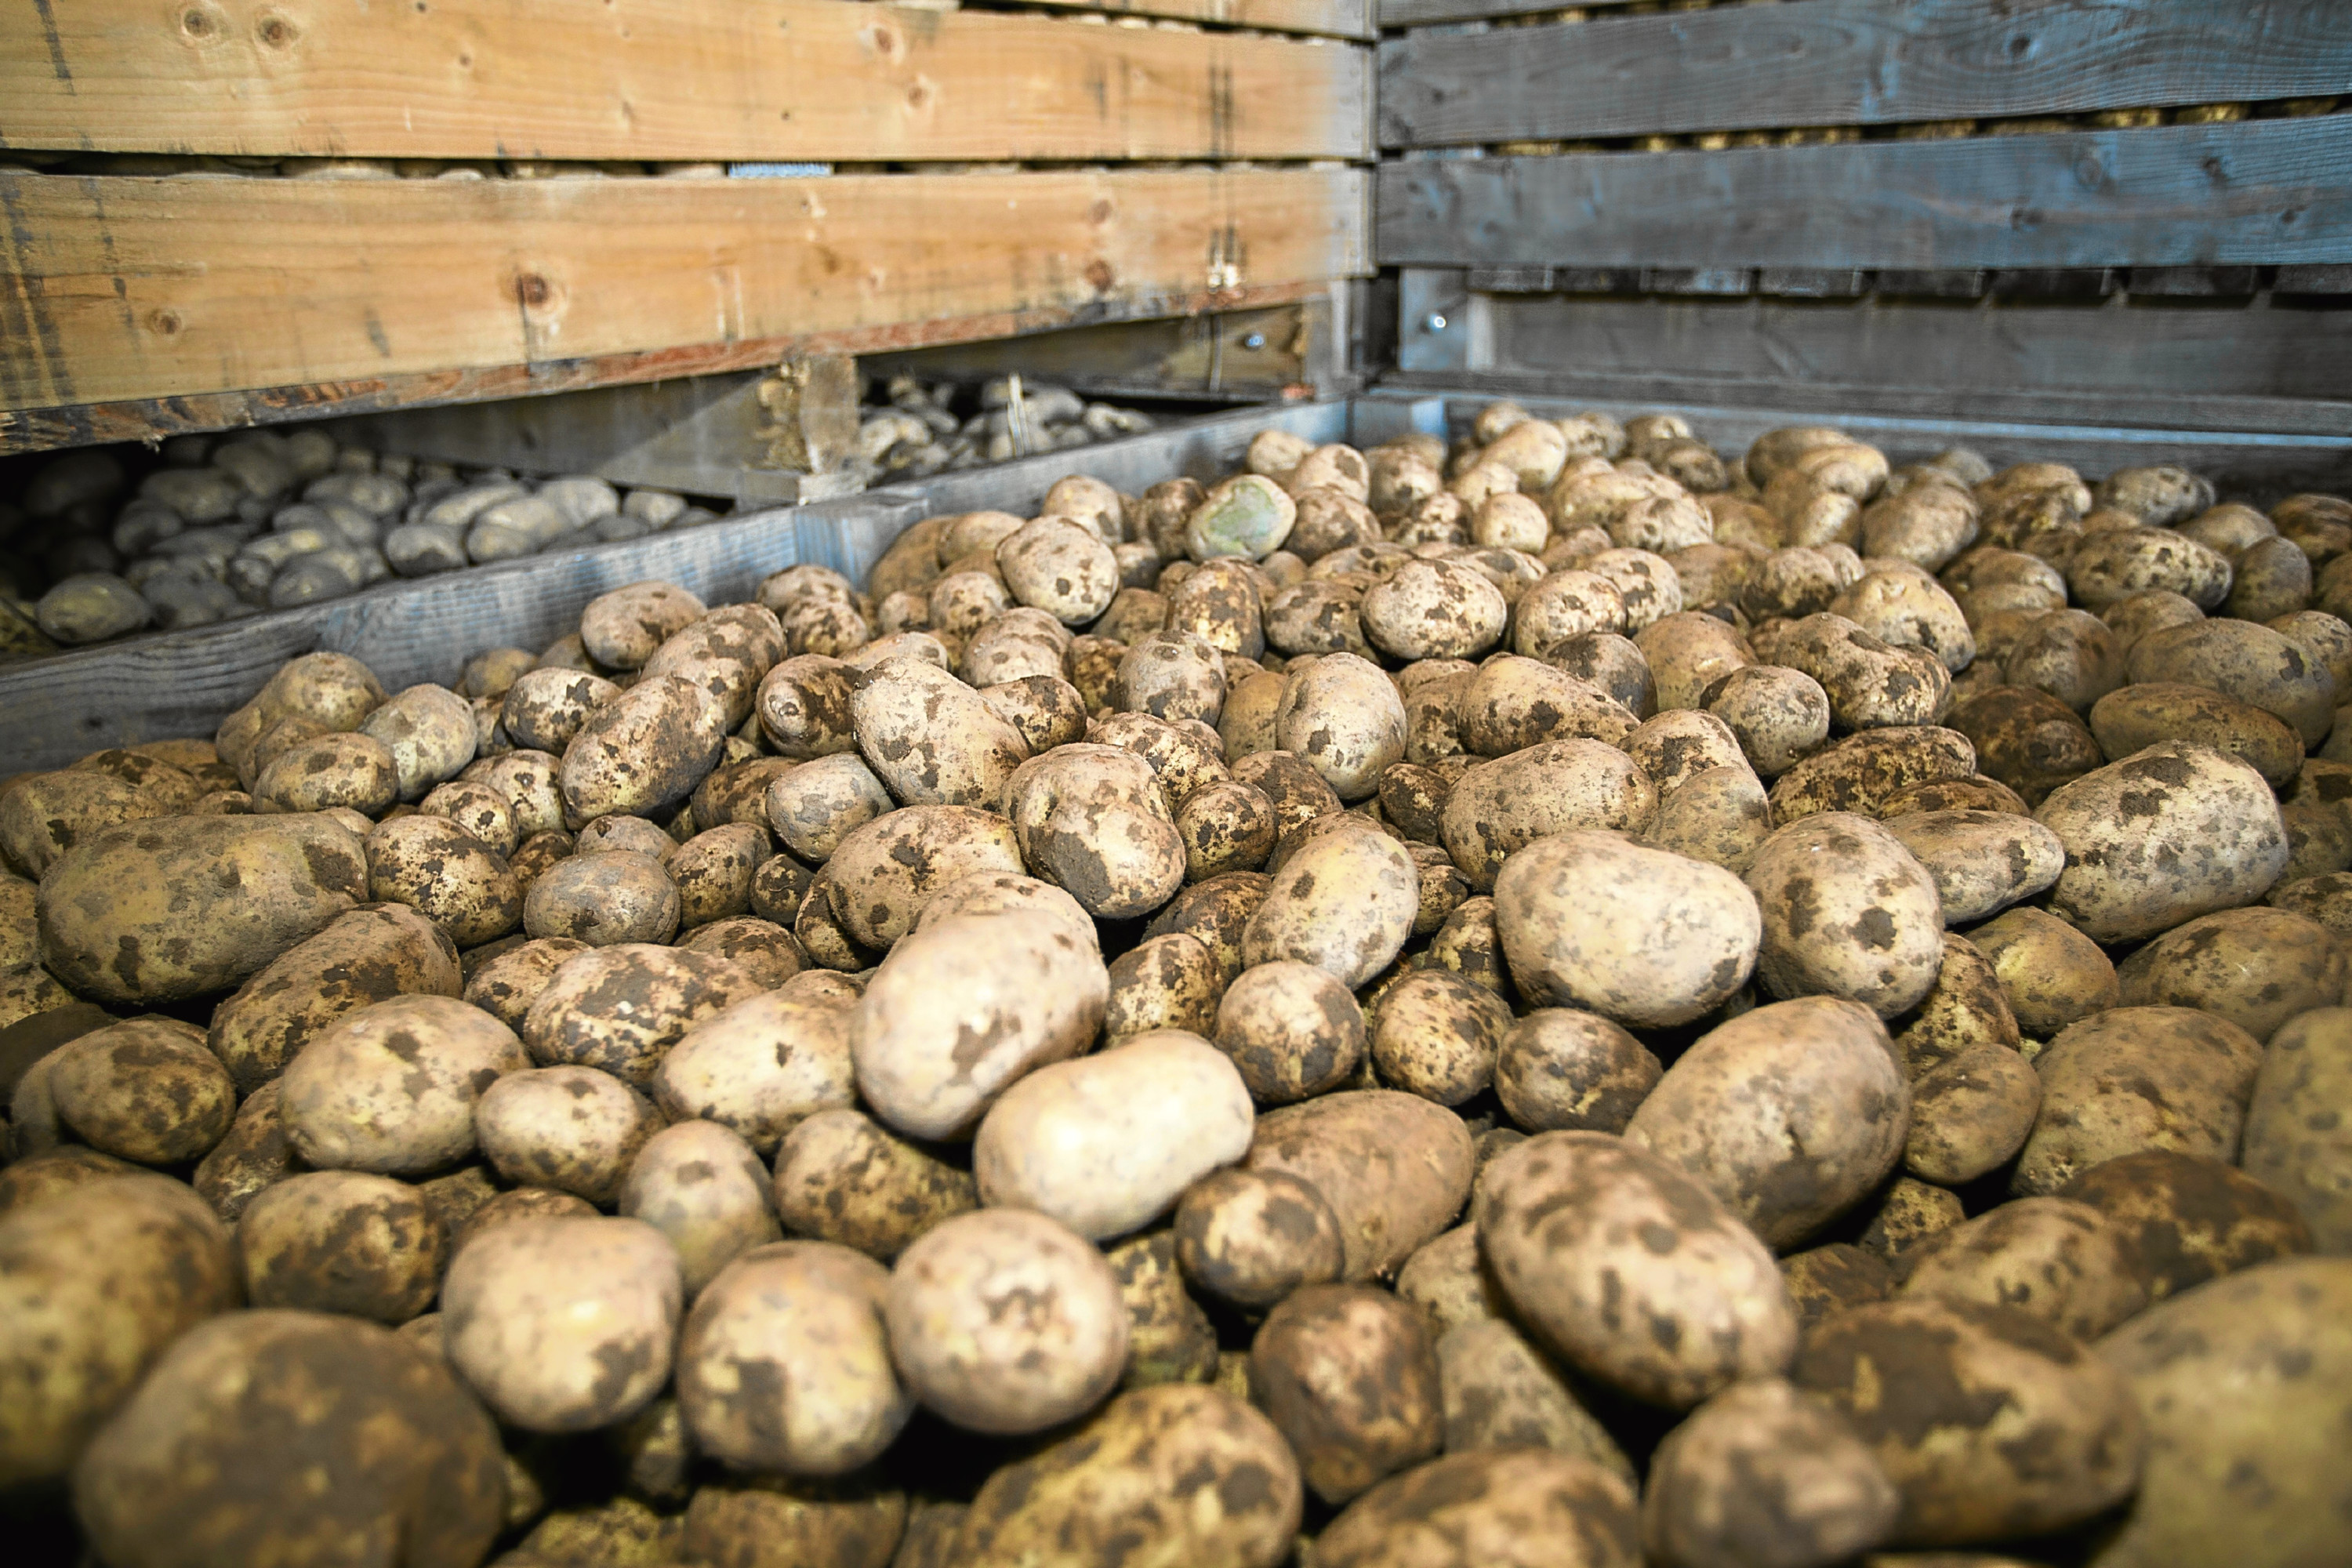 Potato stocks are up almost 25% on last season, according to AHDB